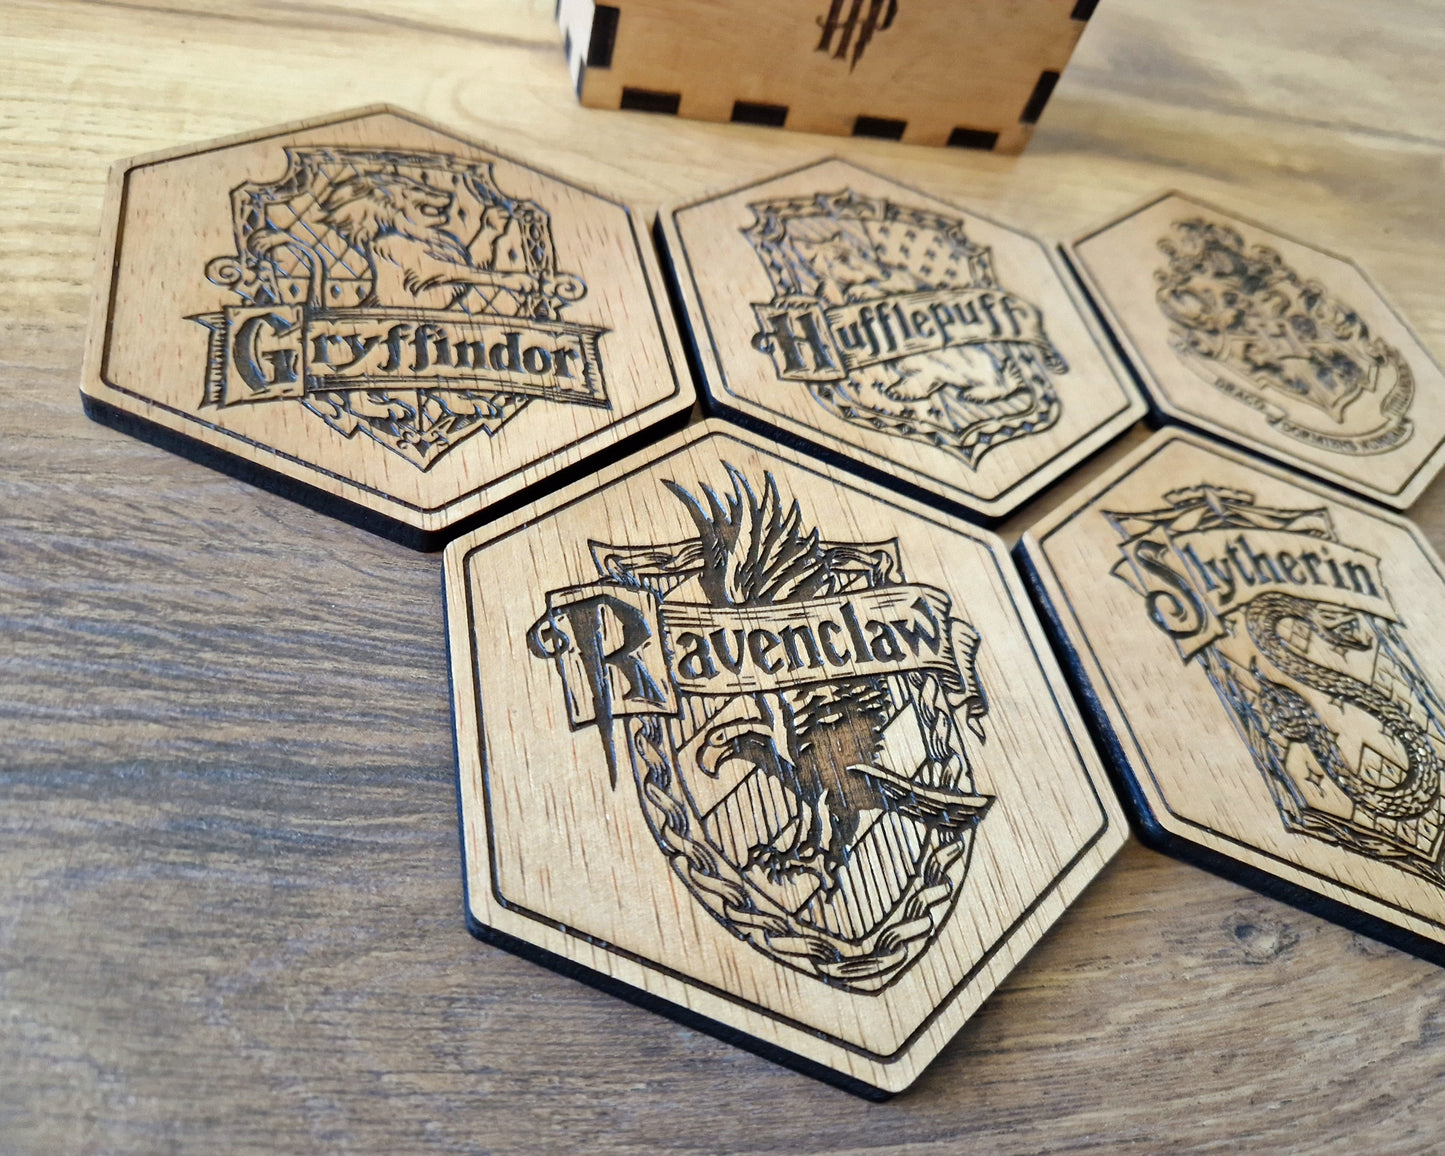 Harry Potter Inspired Hexagonal Coasters - Set of 5